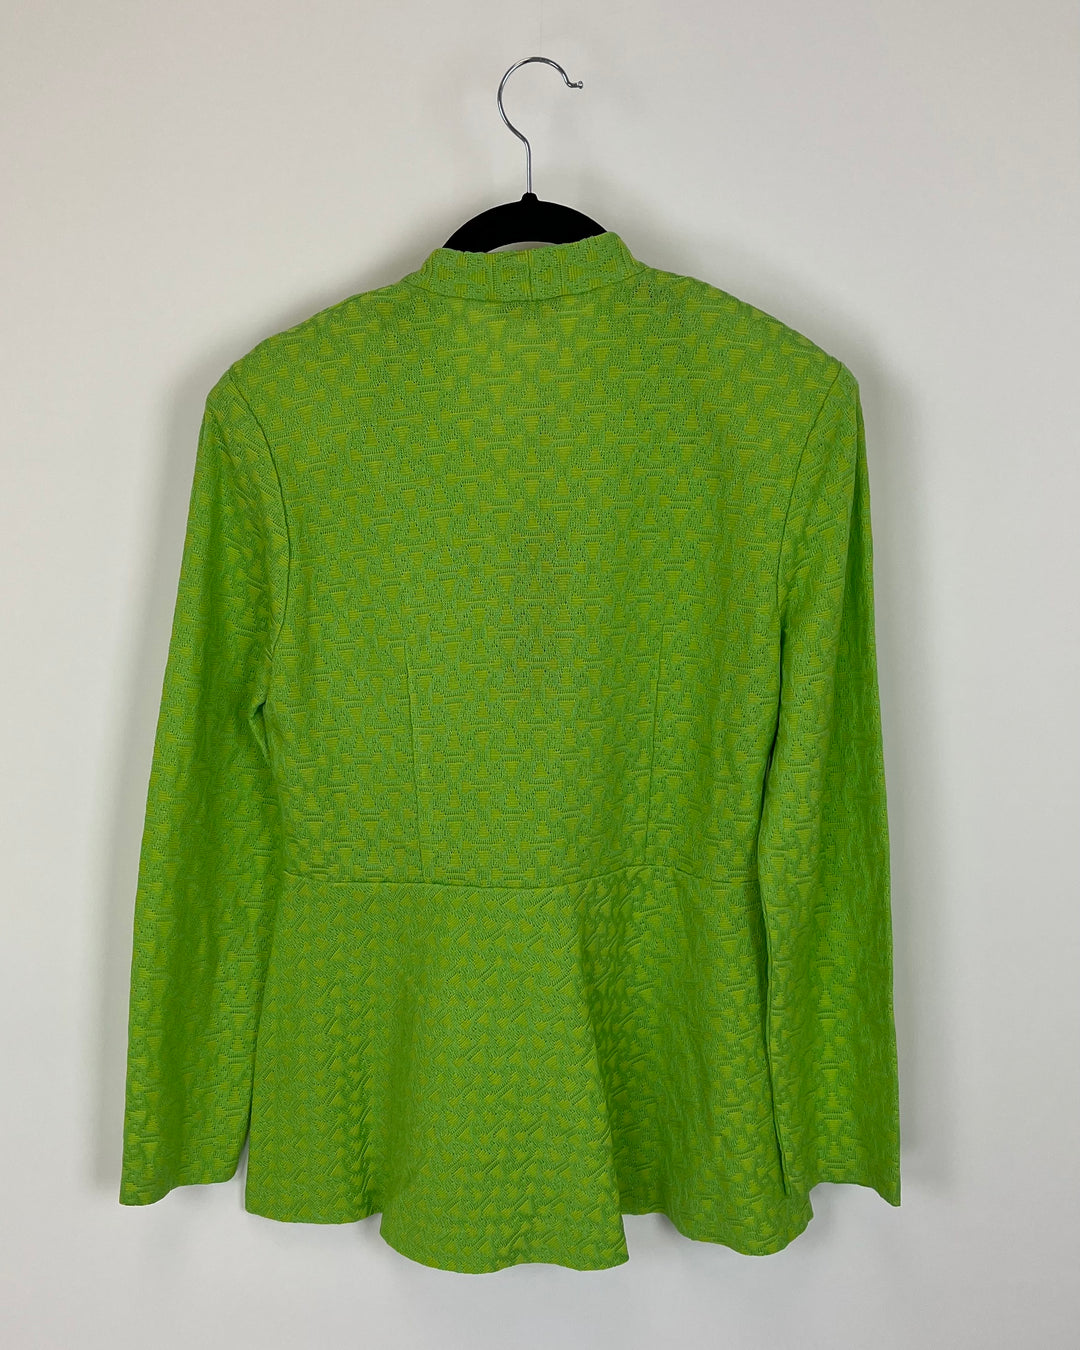 Bright Green Tweed Jacket - Size 2- 26W